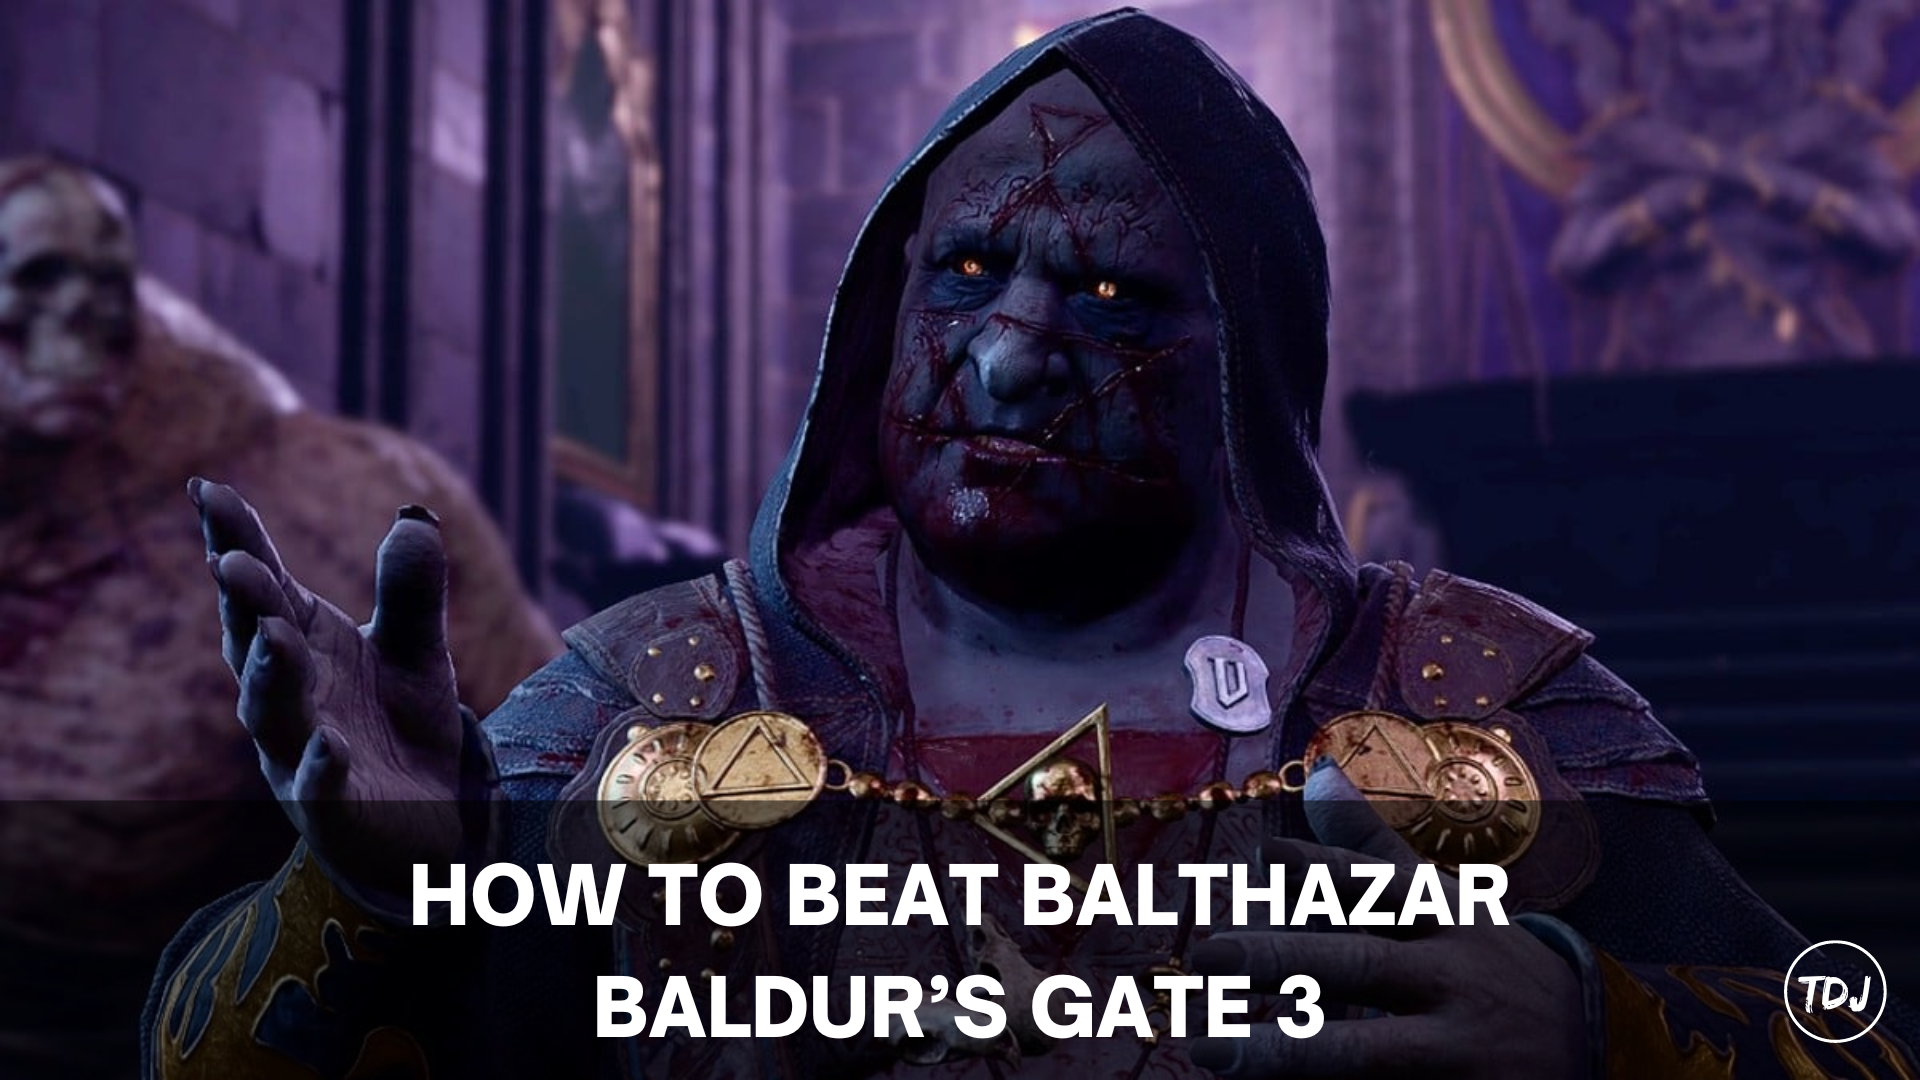 baldur's gate 3 how to beat balthazar